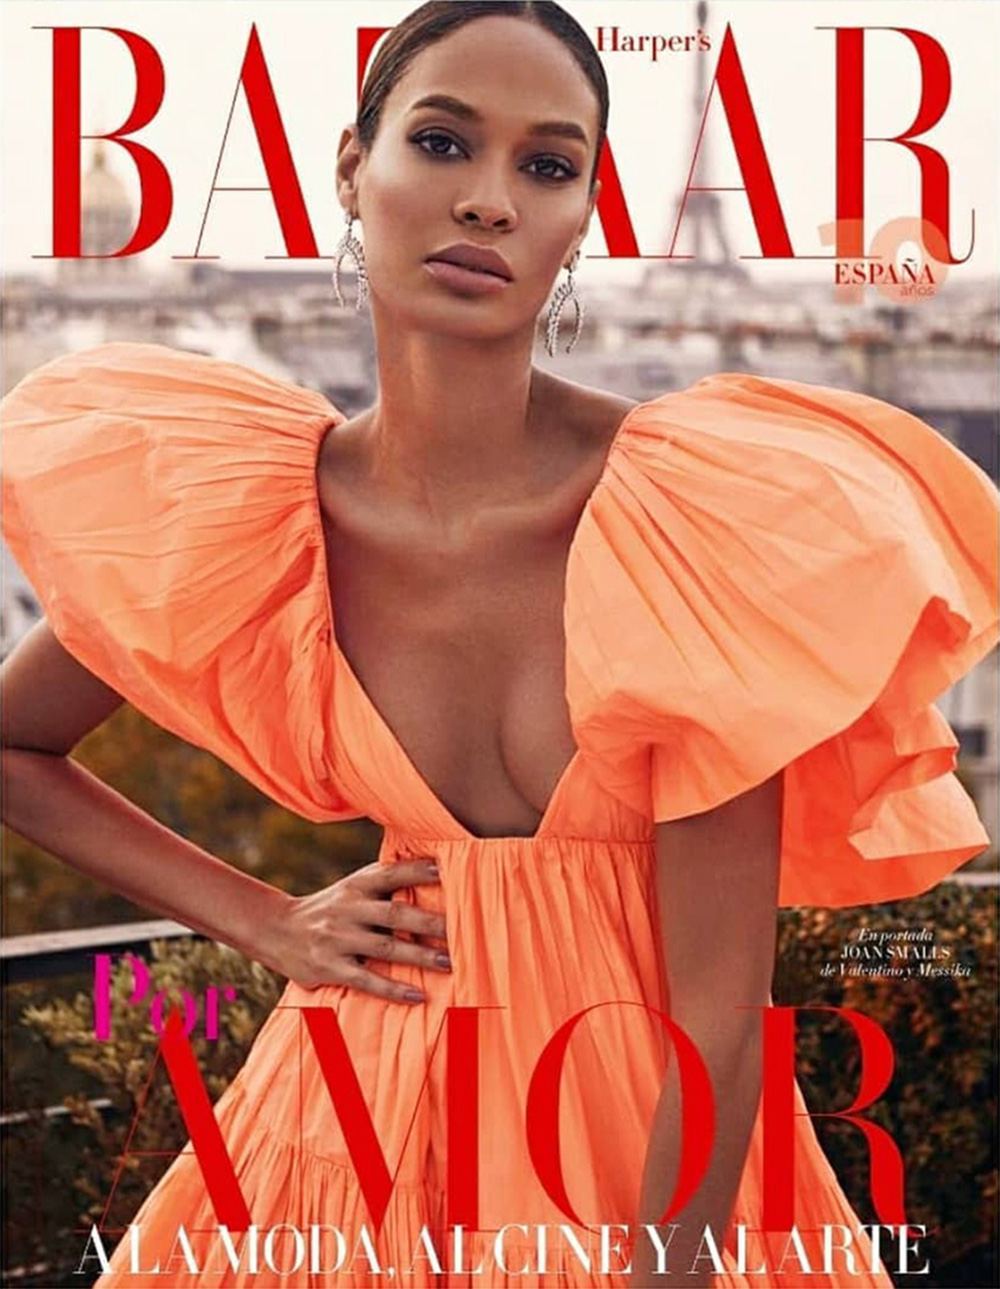 Joan Smalls covers Harper’s Bazaar Spain February 2020 by Xavi Gordo